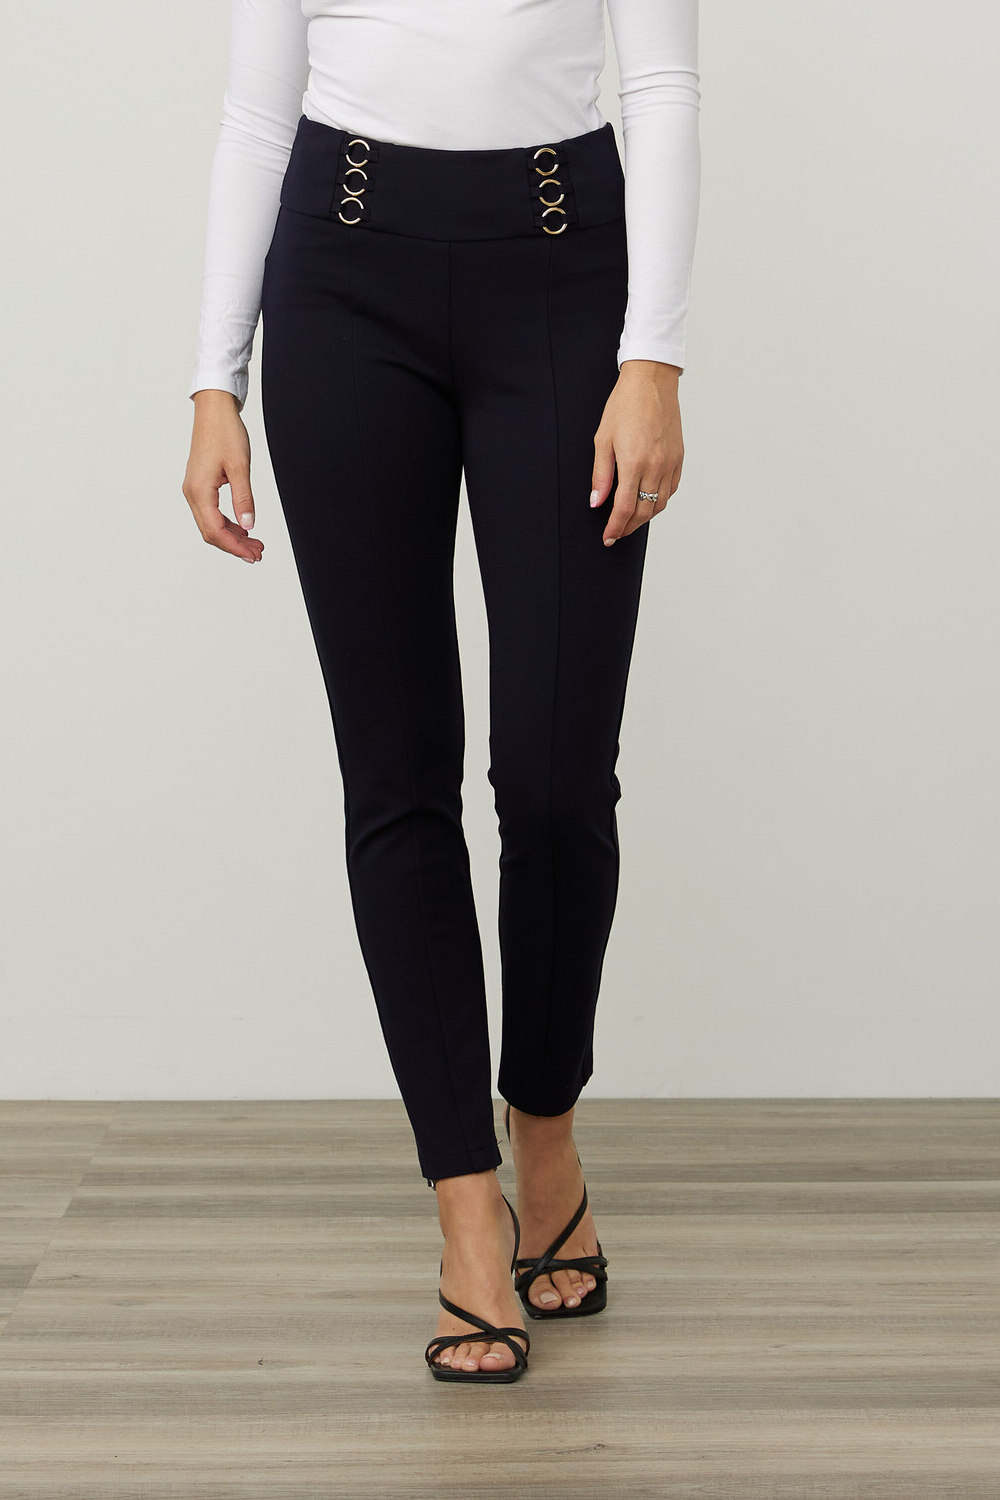 Joseph Ribkoff Slim Fit Pants Style 213651. Midnight Blue